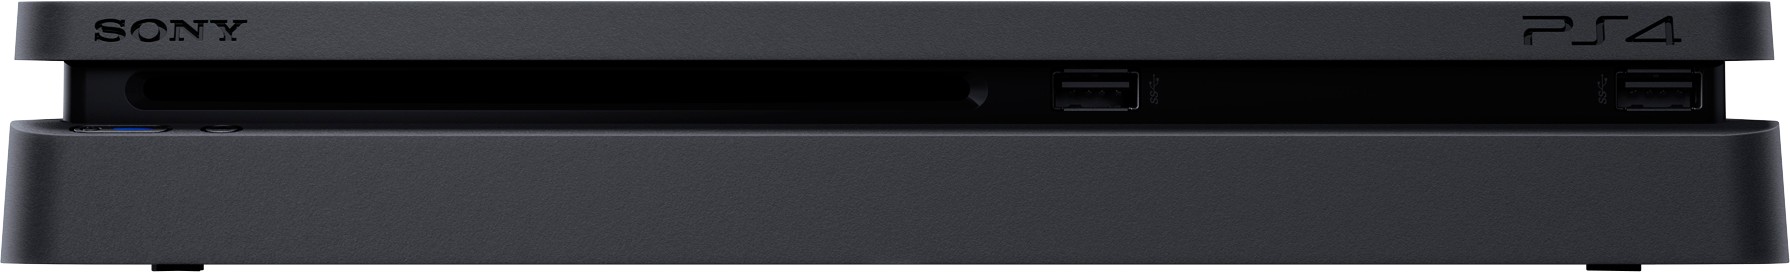 PlayStation 4 Slim (500GB, Jet Black) + 2 Controller